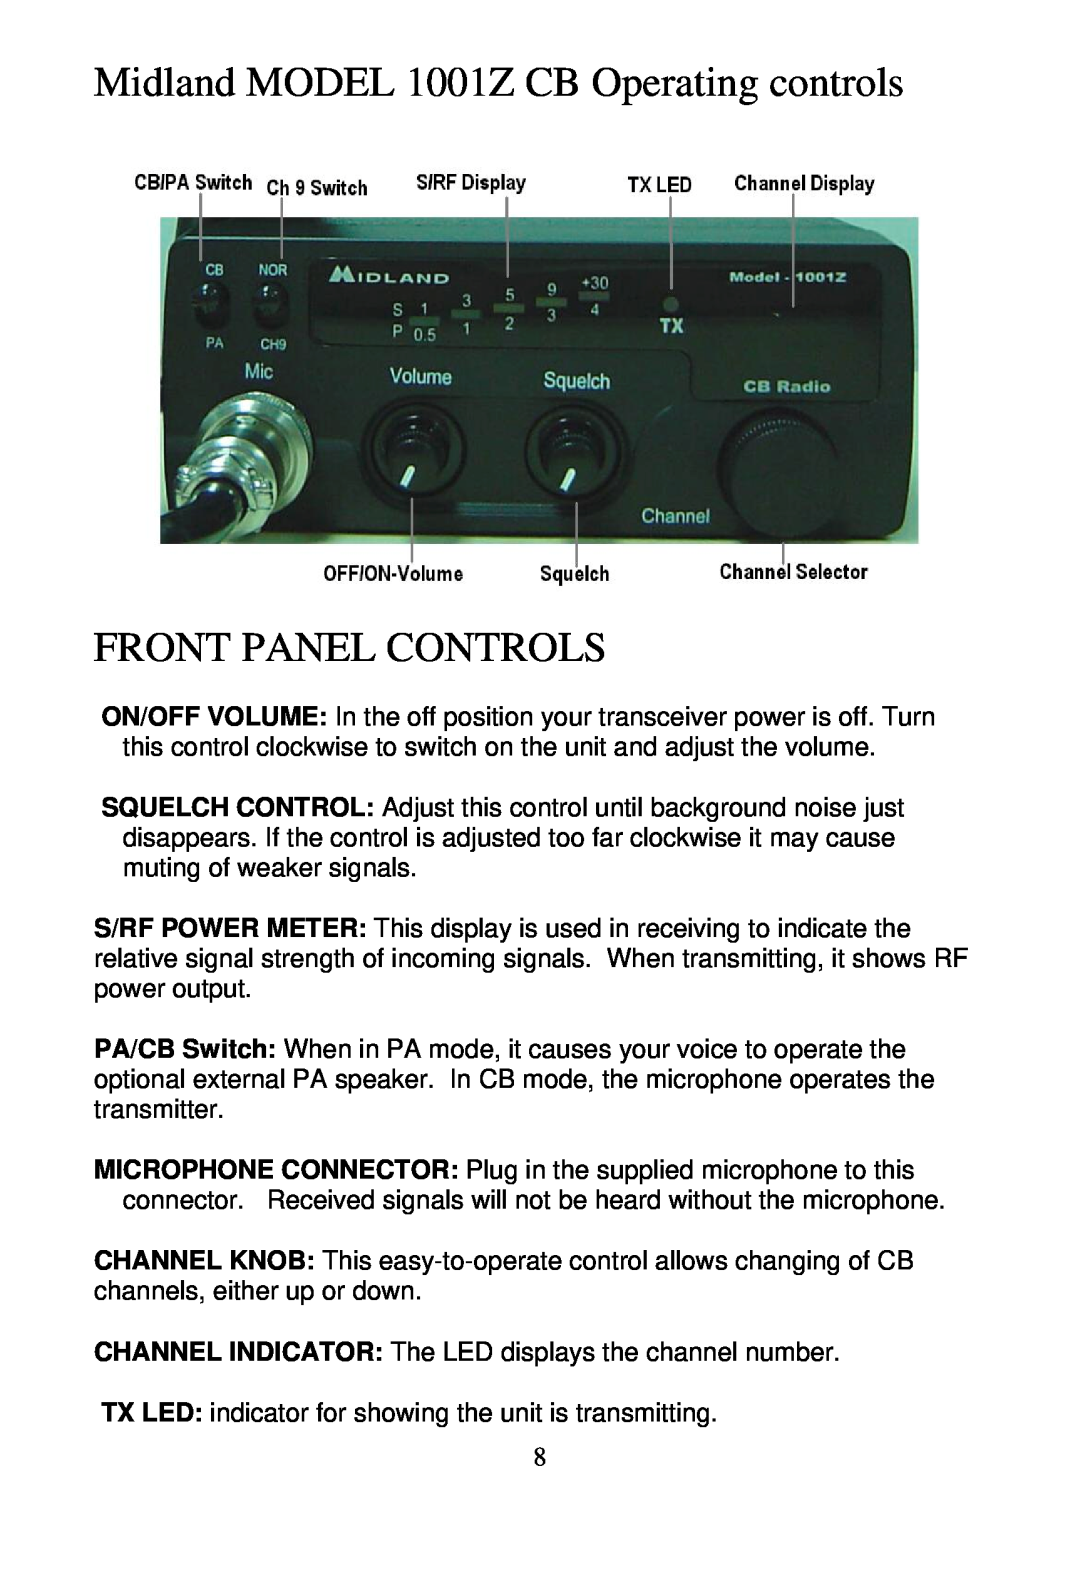 Midland Radio 1001z manual Midland MODEL 1001Z CB Operating controls, Front Panel Controls 